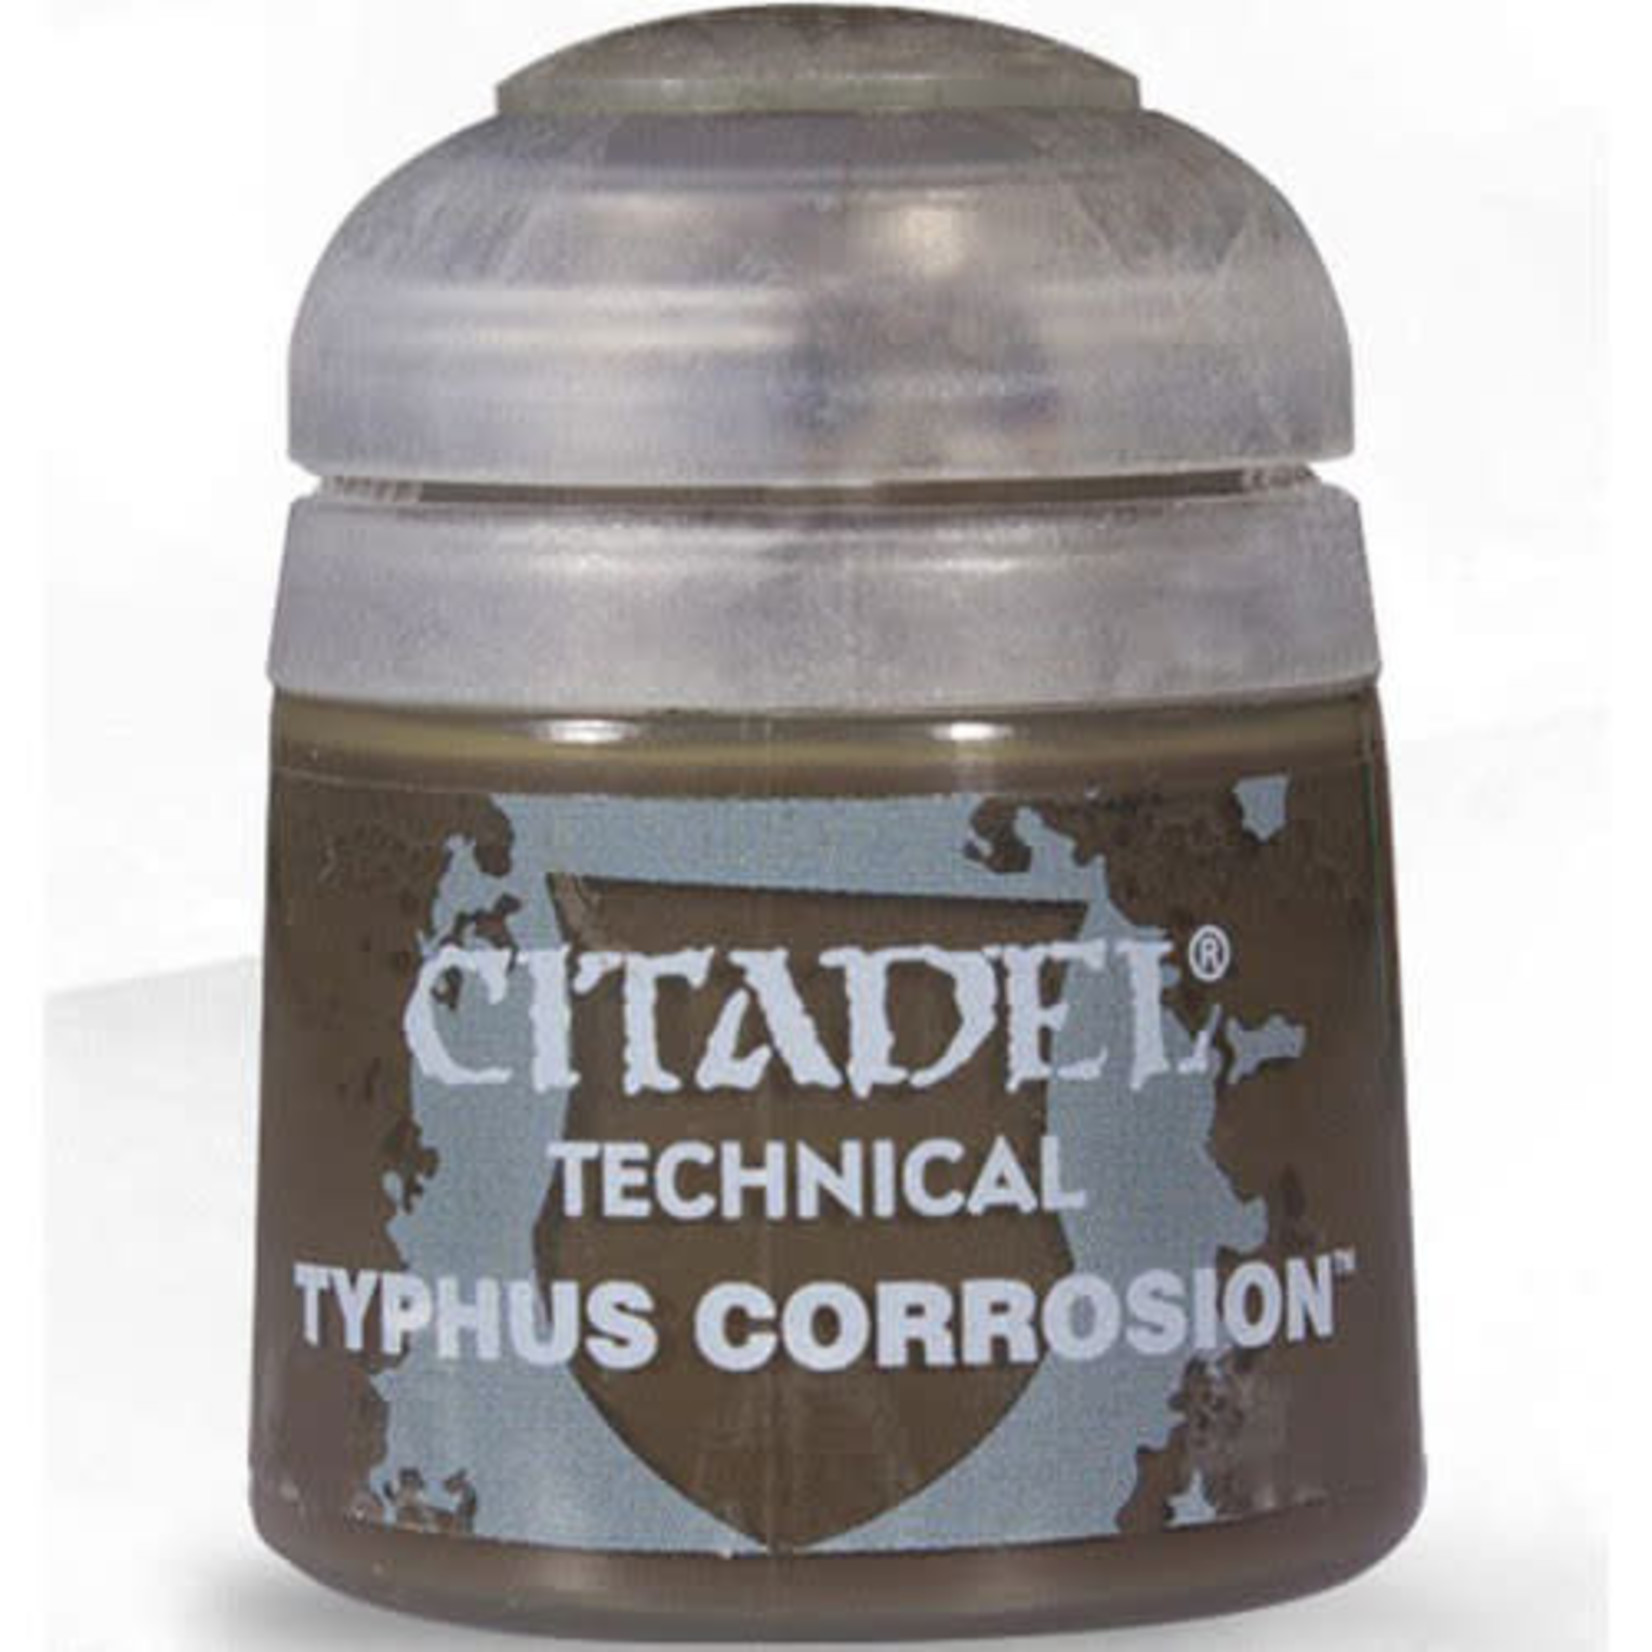 [P360]TECHNICAL: Typhus Corrosion